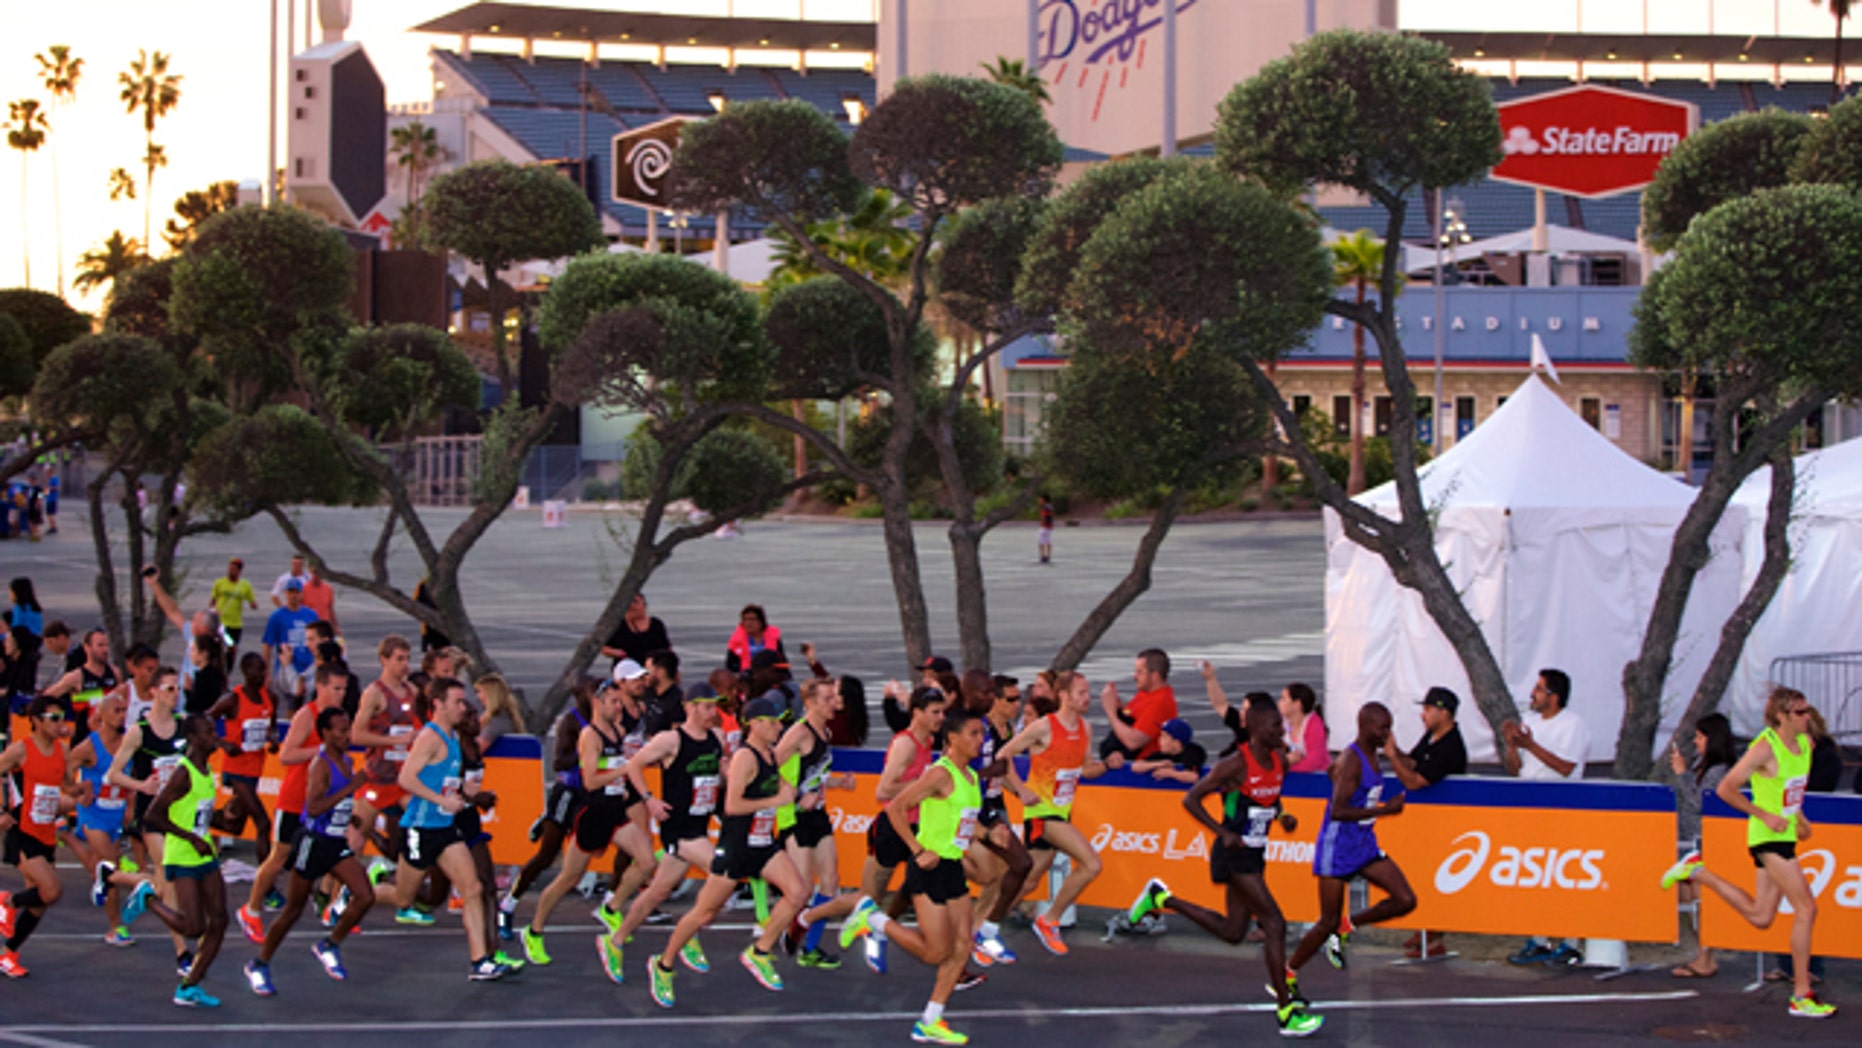 Los Angeles Marathon runner revived after going into cardiac arrest